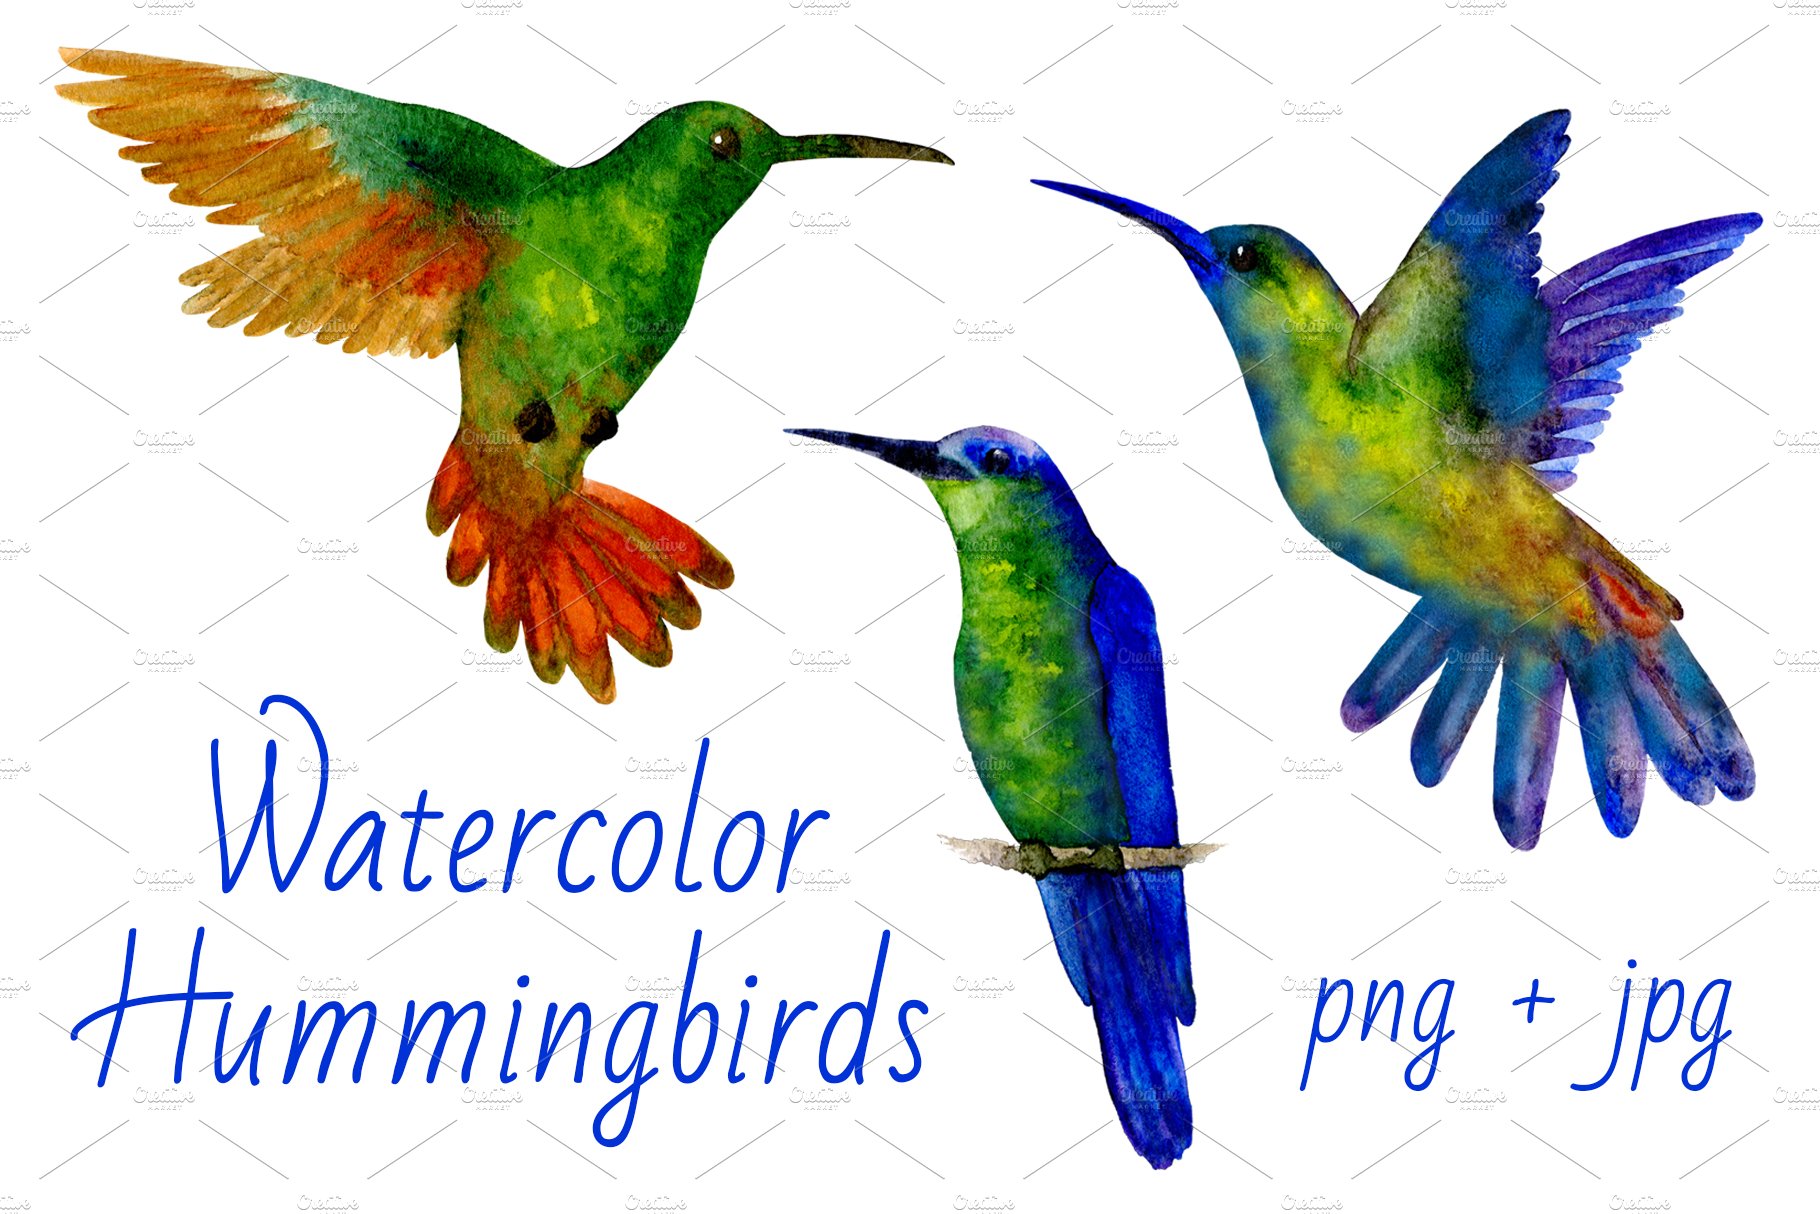 Hummingbirds Watercolor cover image.